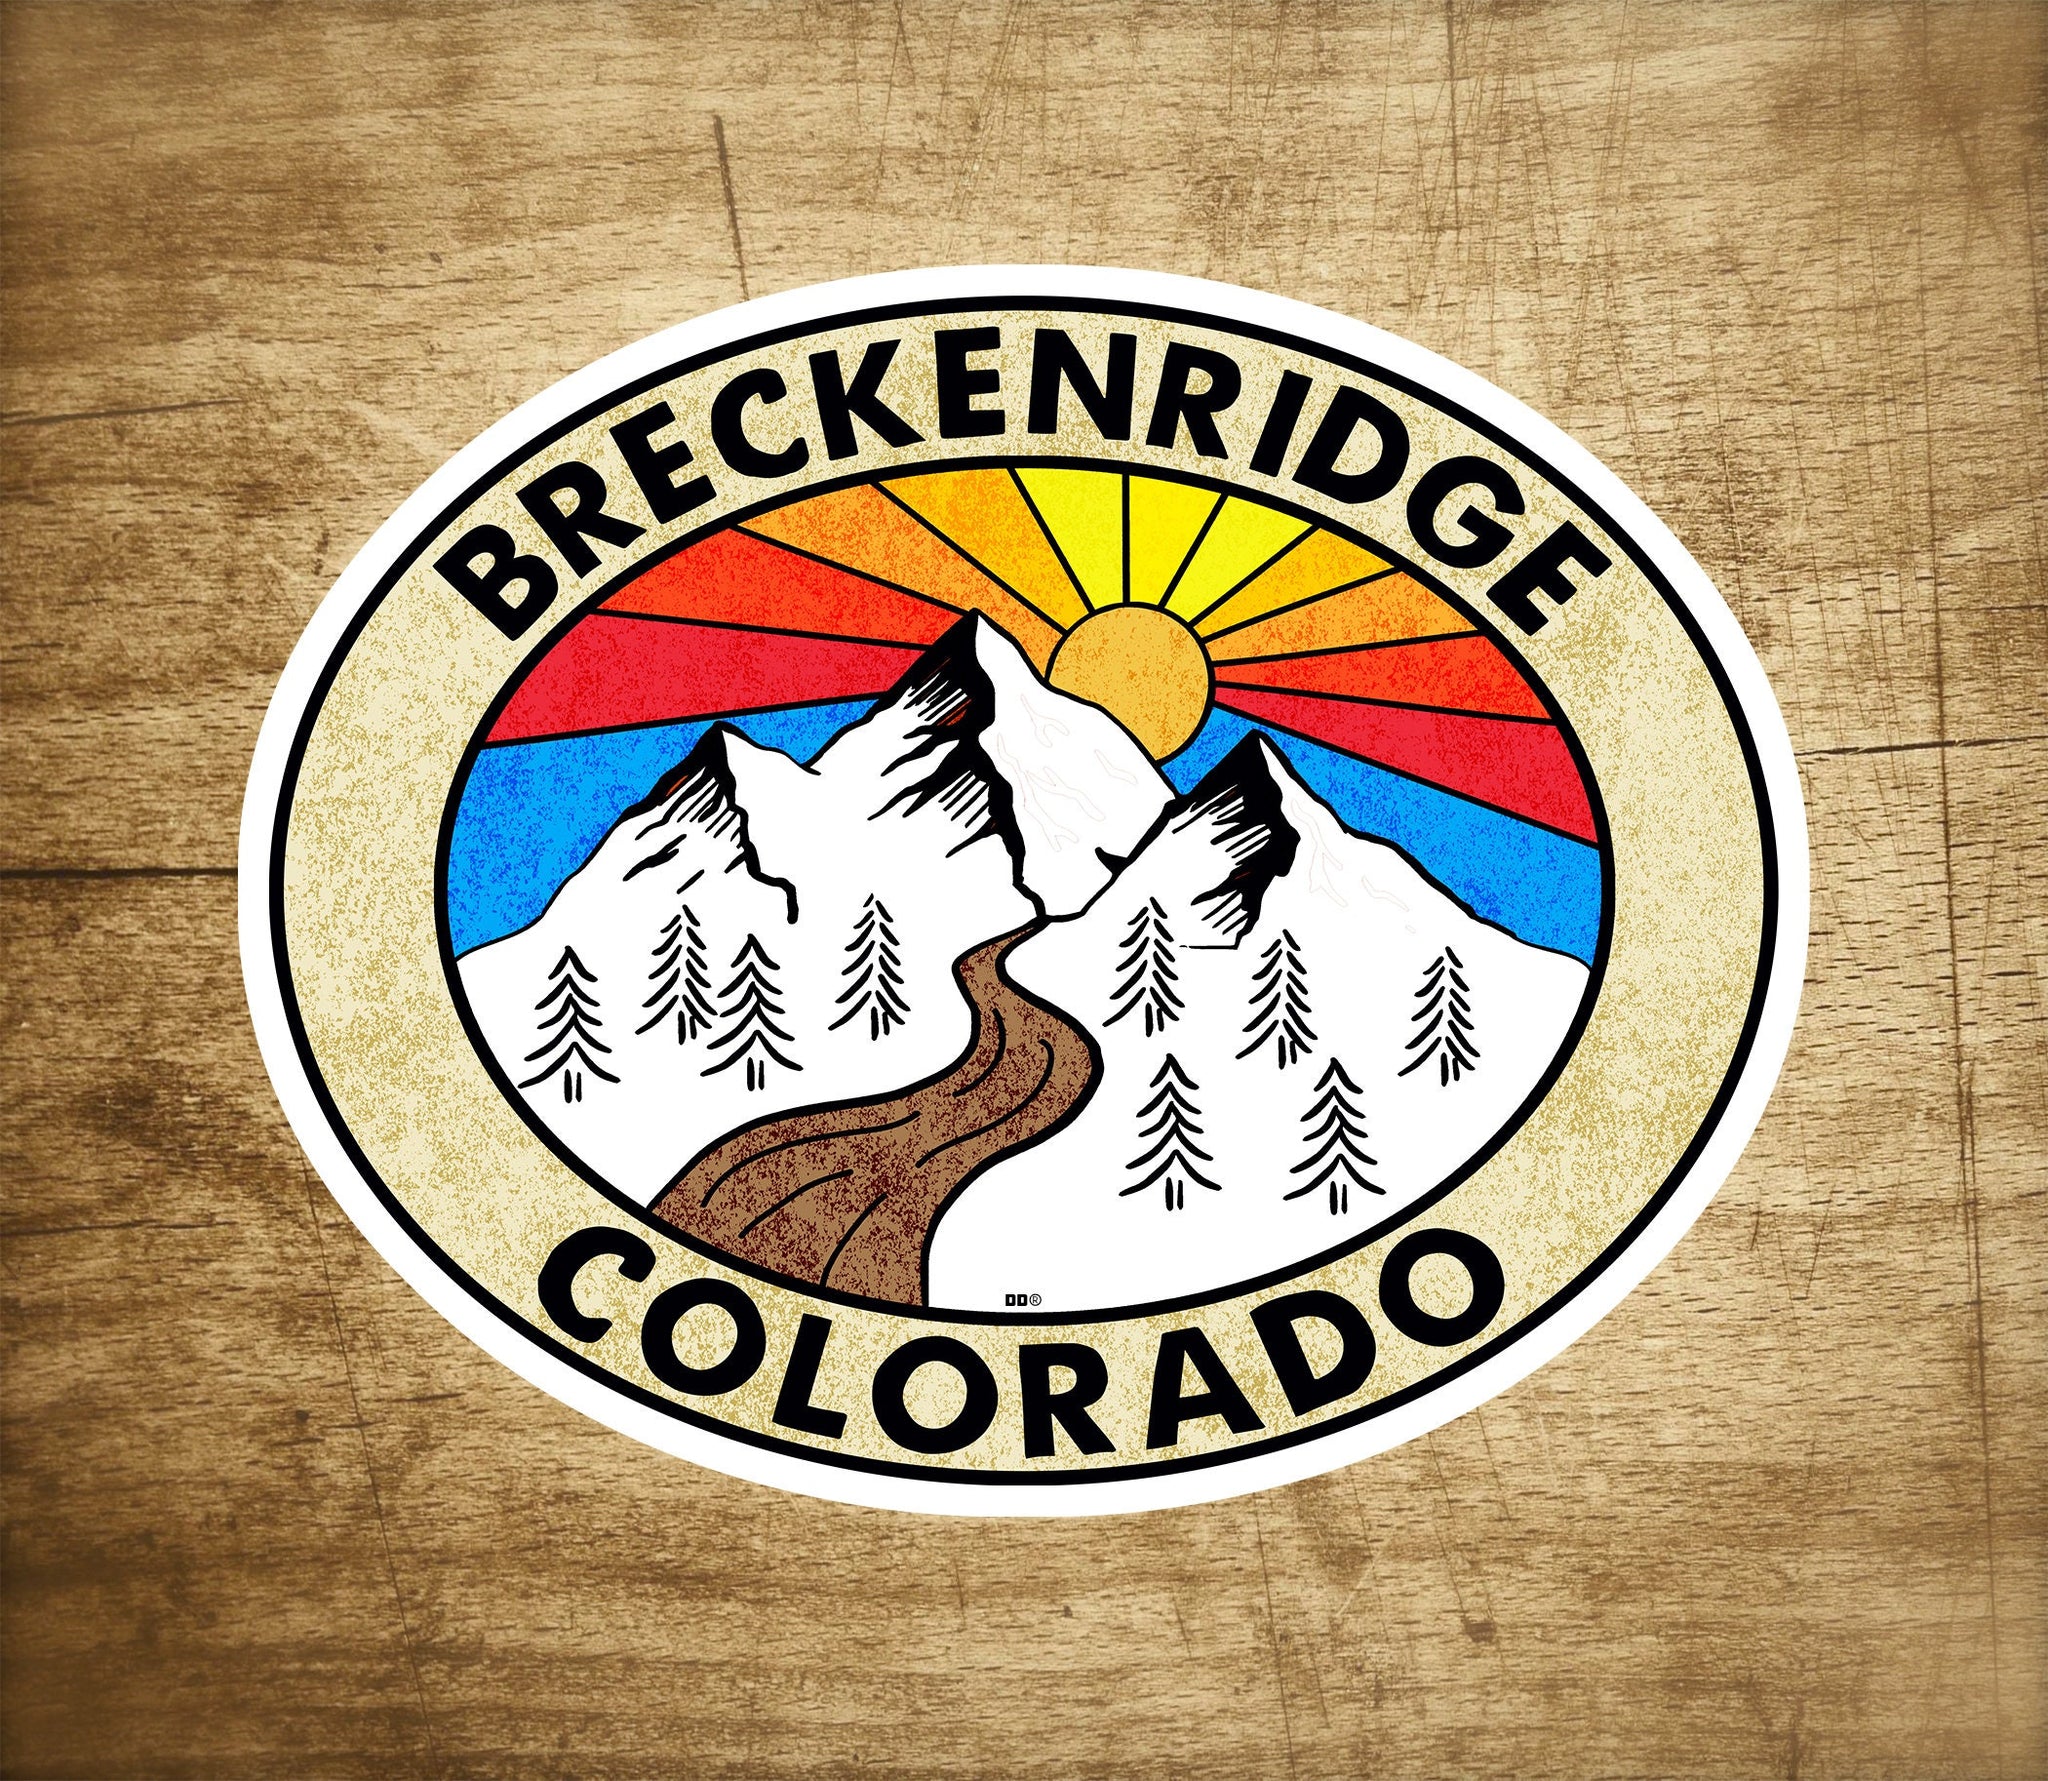 Ski Breckenridge Colorado Skiing Decal Sticker 3.5" x 2.75" Vinyl Laptop Bumper Luggage